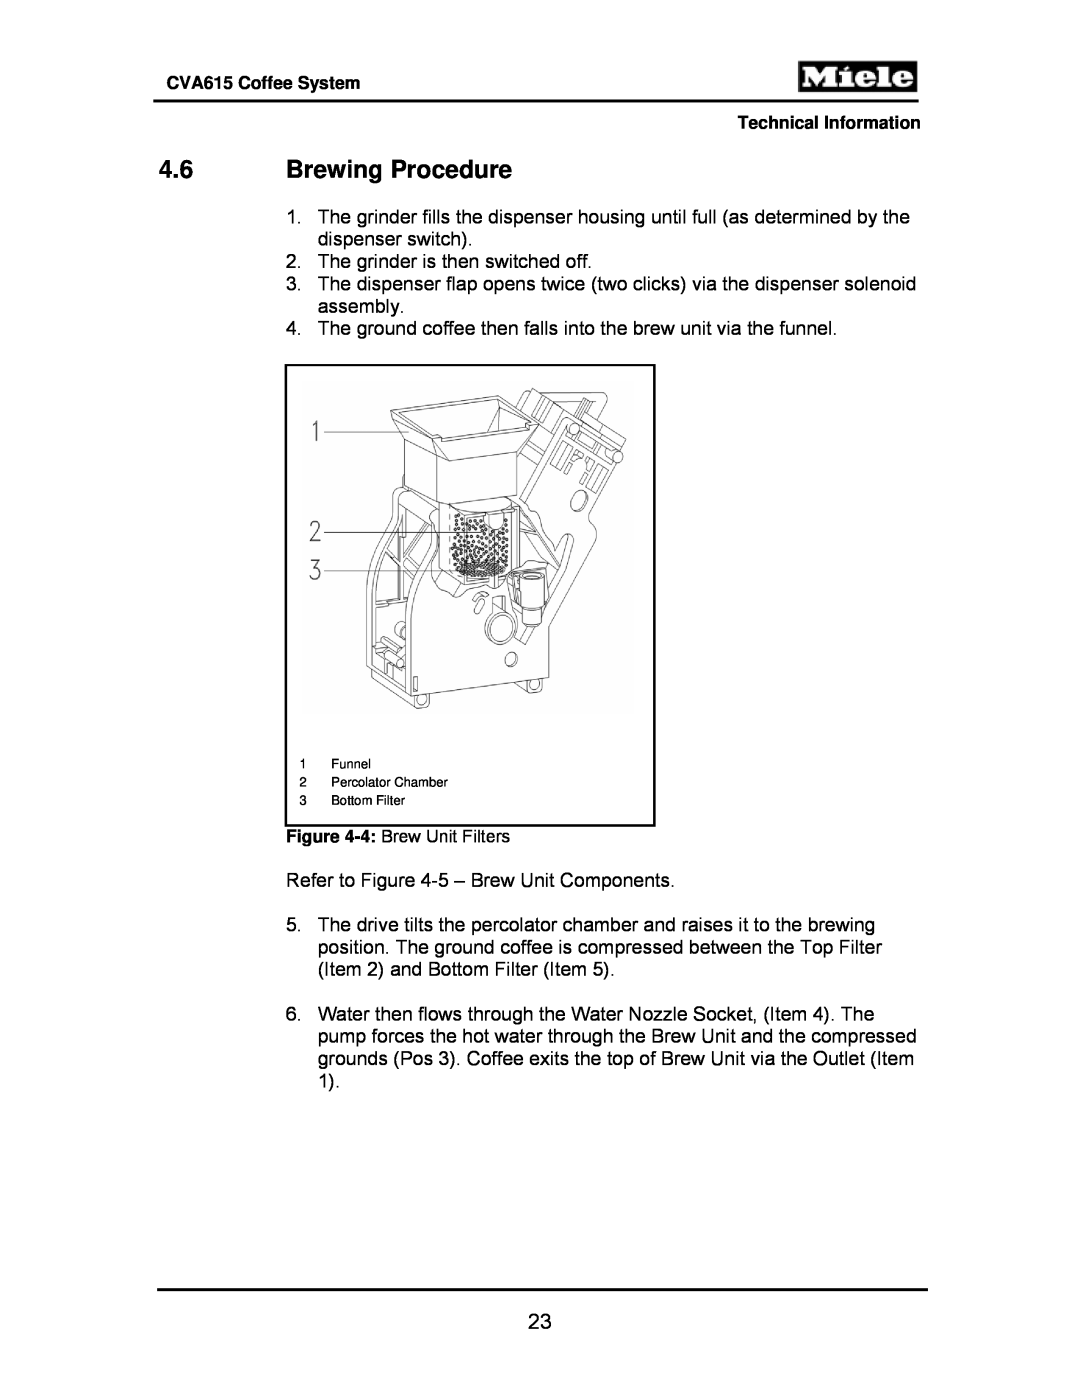 Miele CVA615 manual 4.6Brewing Procedure 